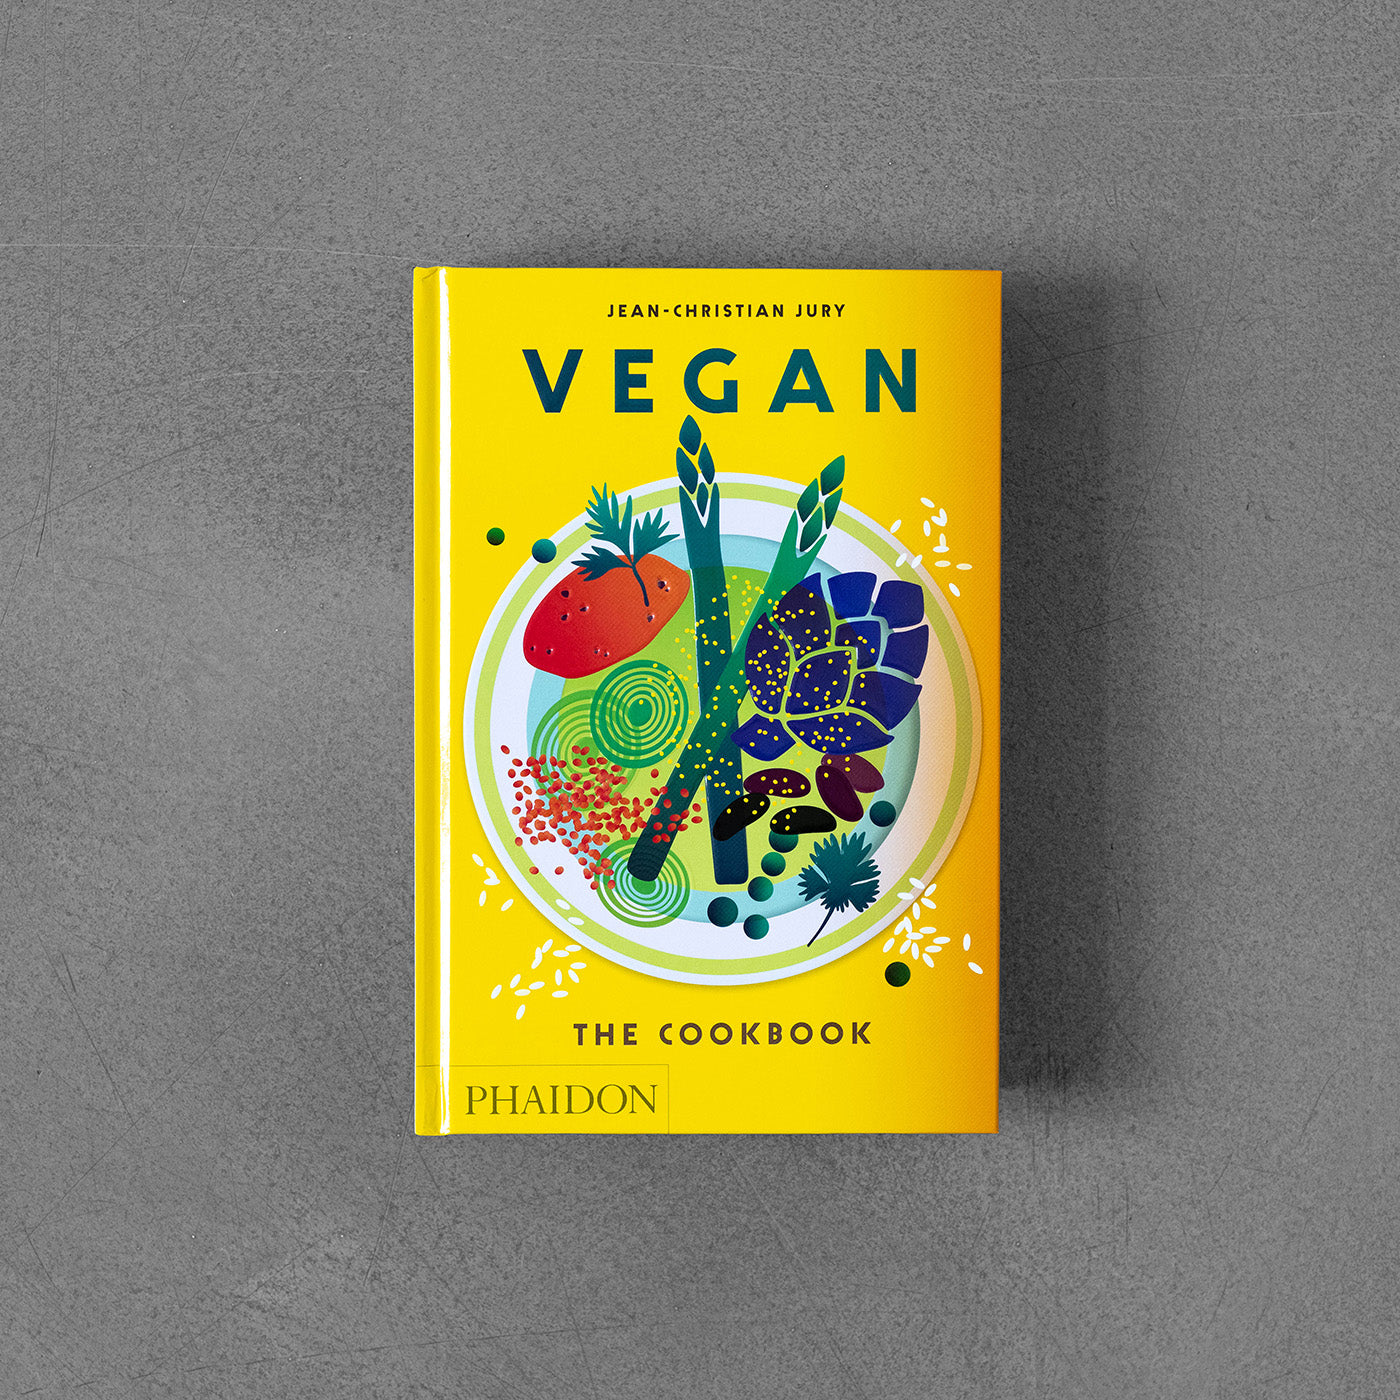 Vegan: The Cookbook Phaidon